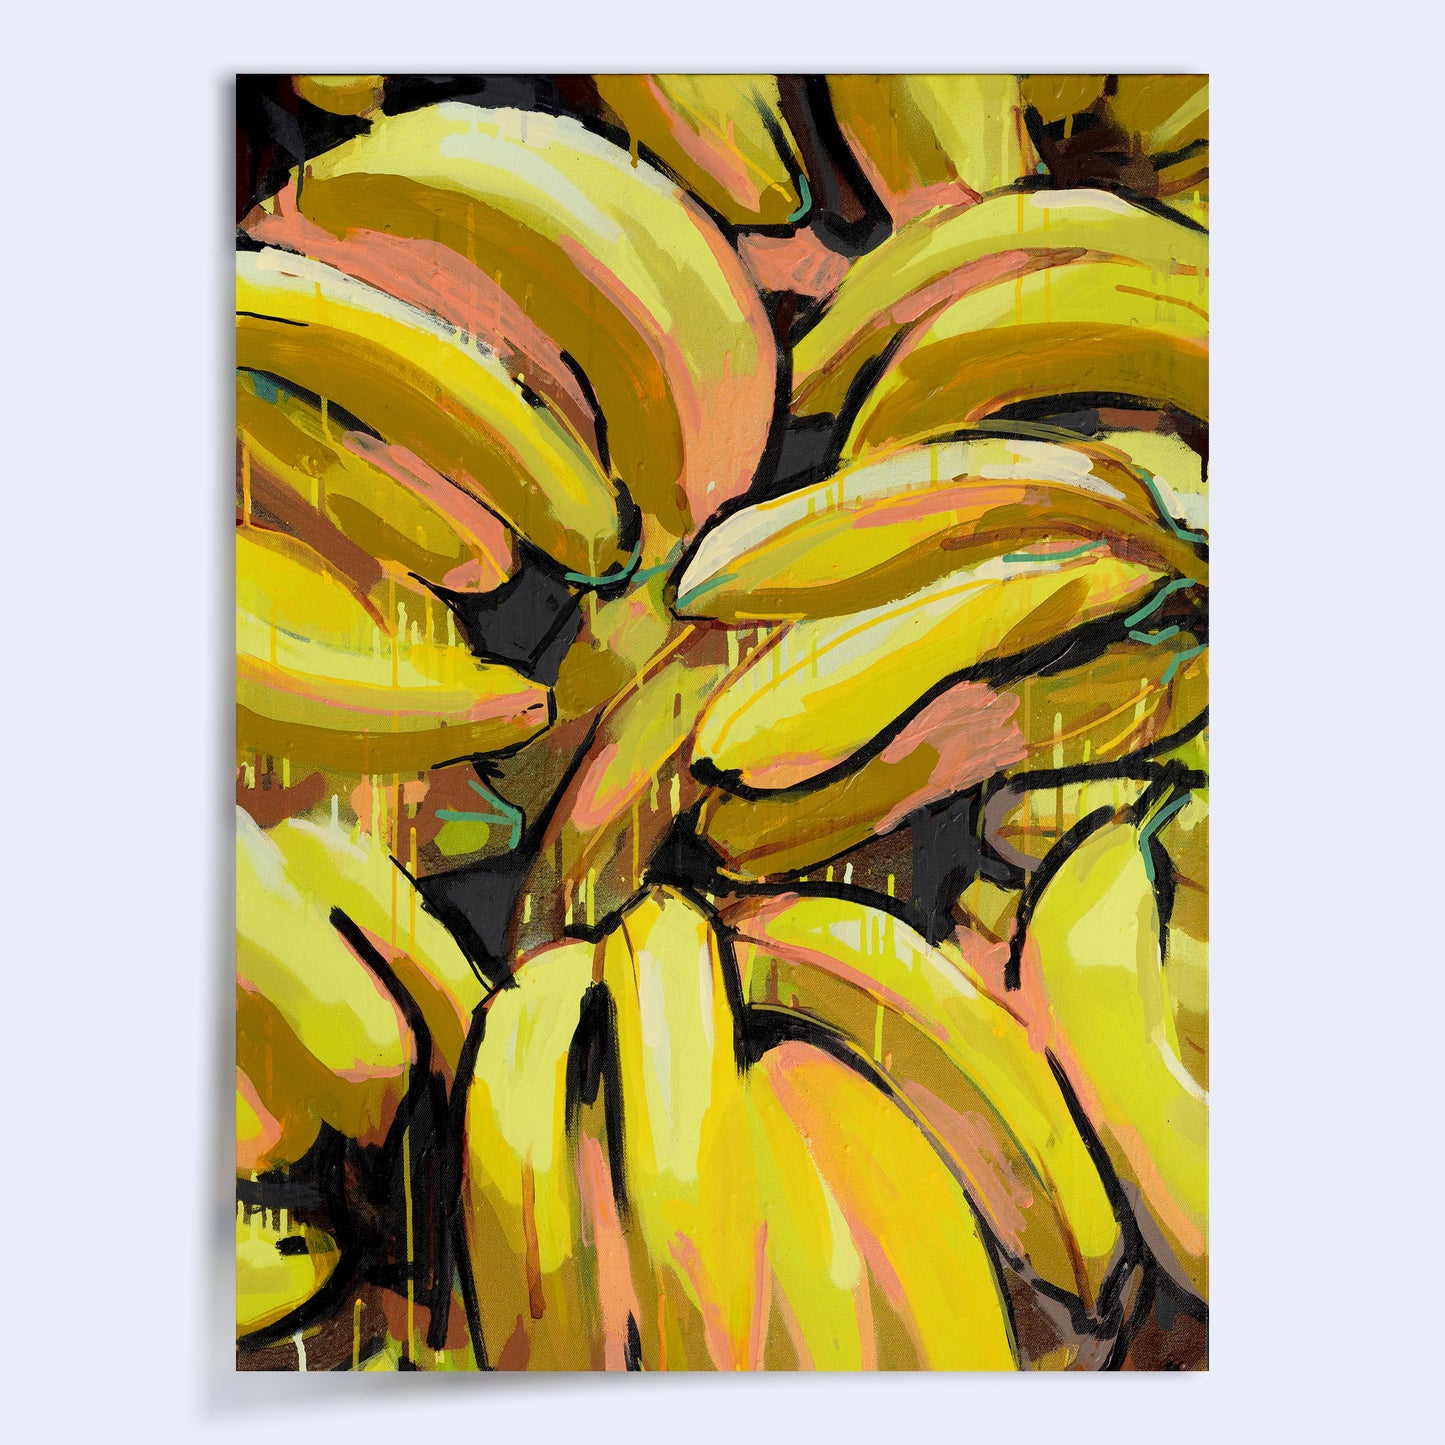 18 x 24 'Bananas' Prints